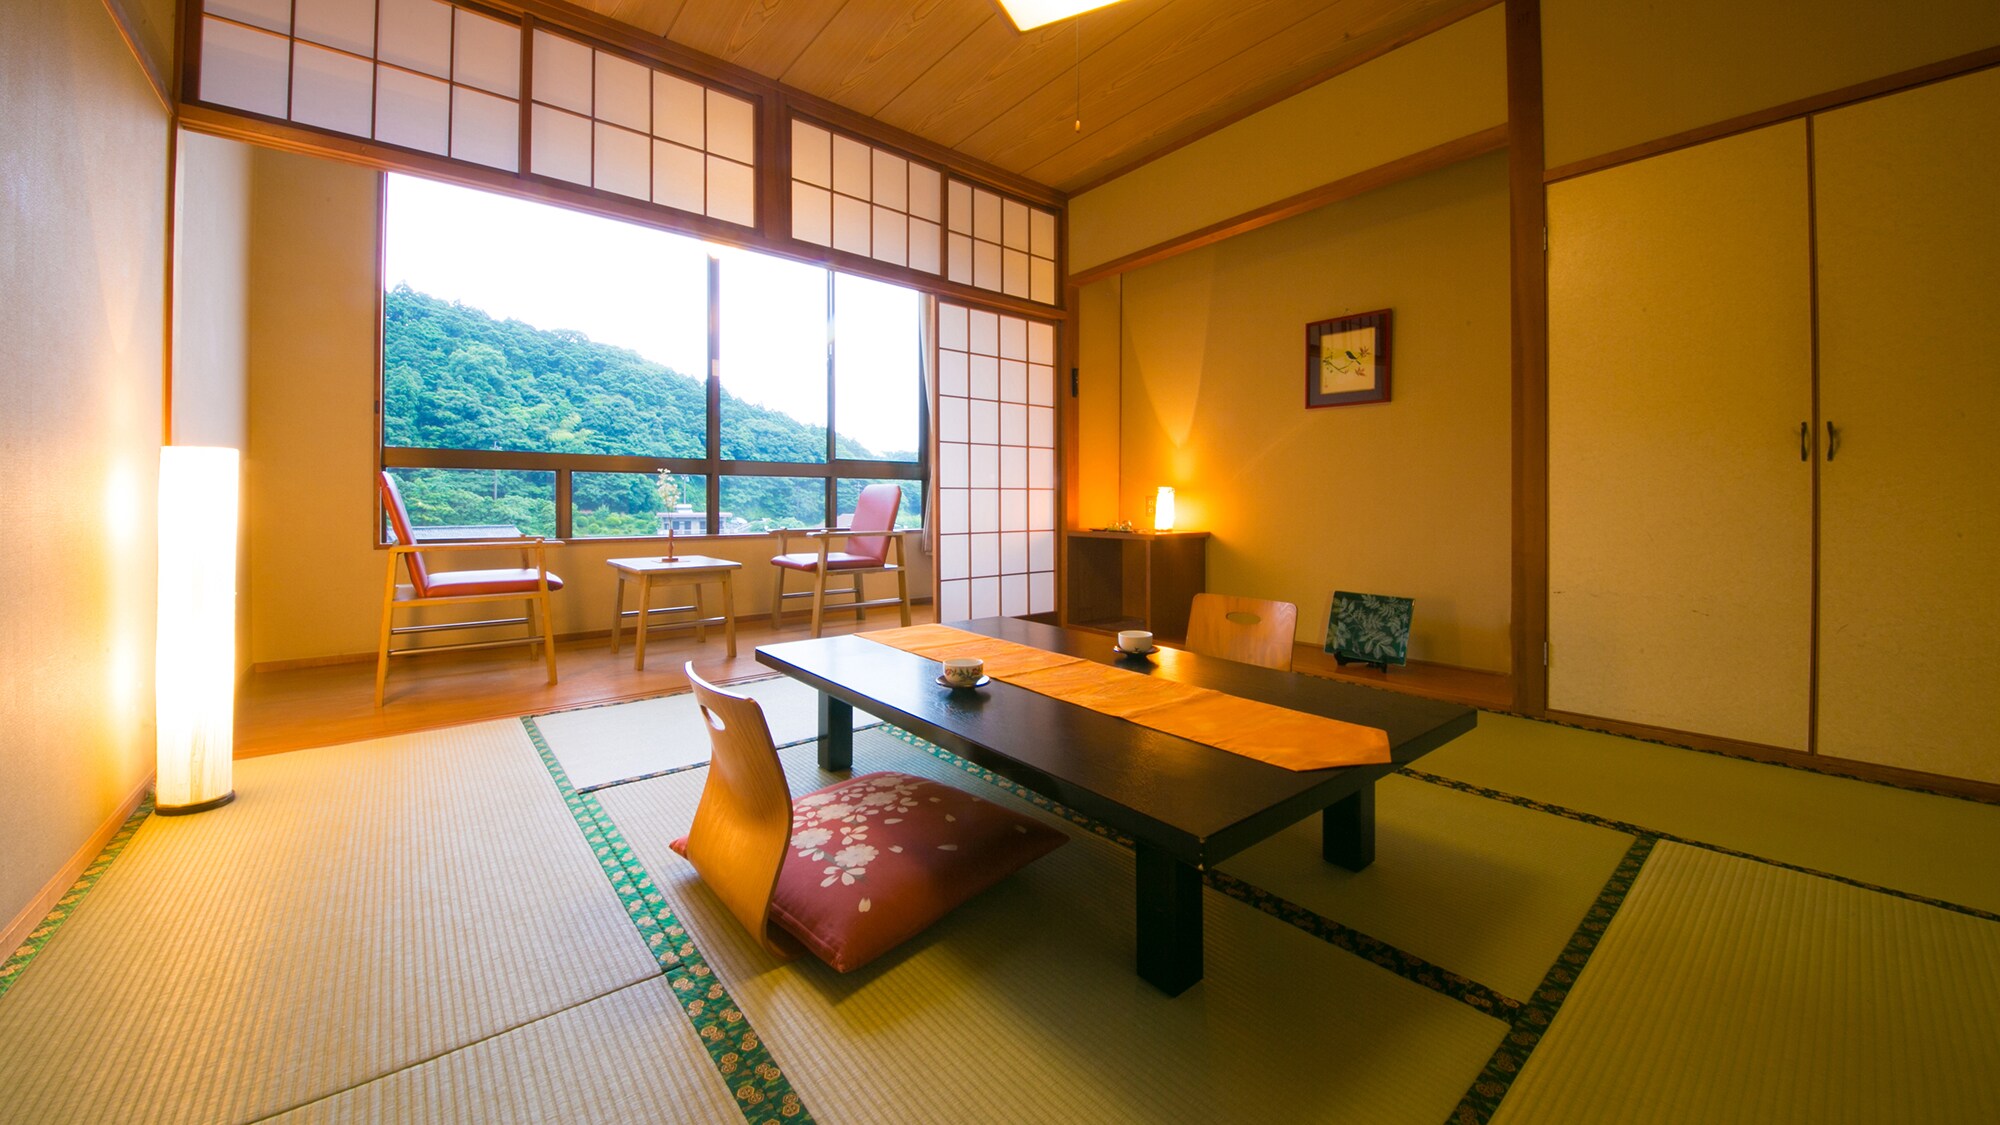 ★ Standard Japanese-style room ≪8 tatami mats≫ ★